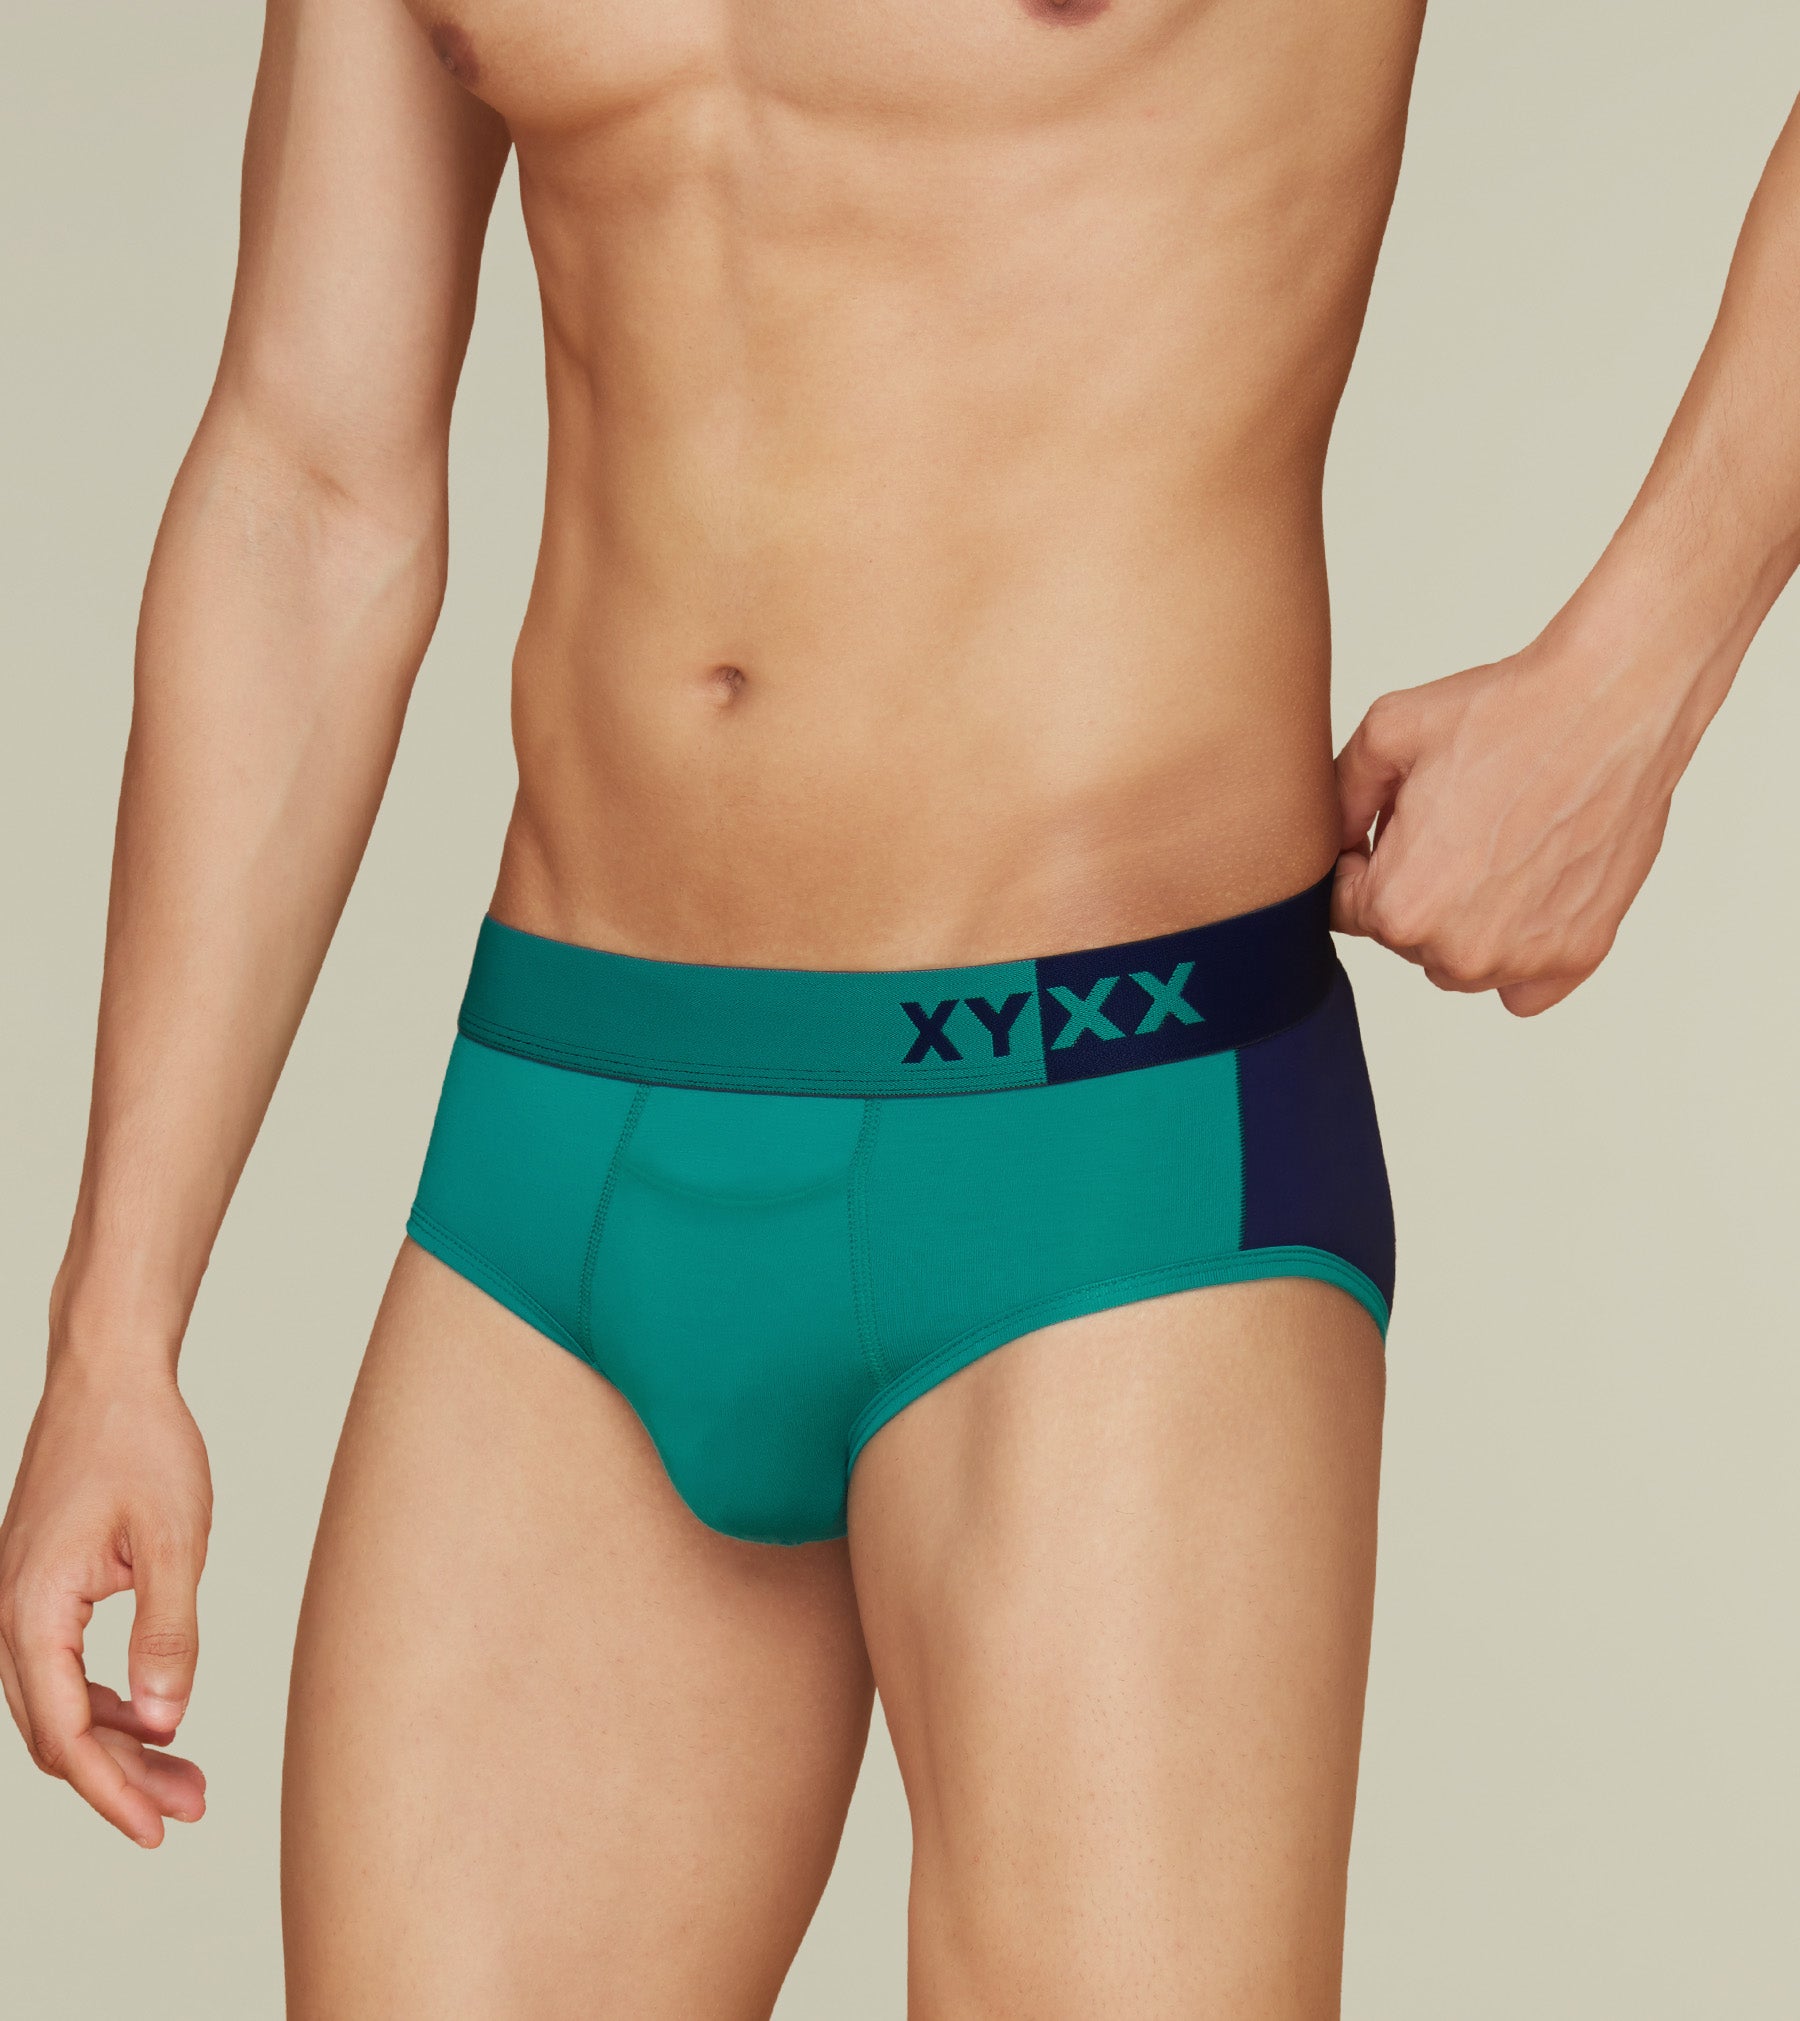 Dualist Modal Briefs For Men Pack of 3 (Grey, Aqua Blue, Lime Yellow) -  XYXX Mens Apparels